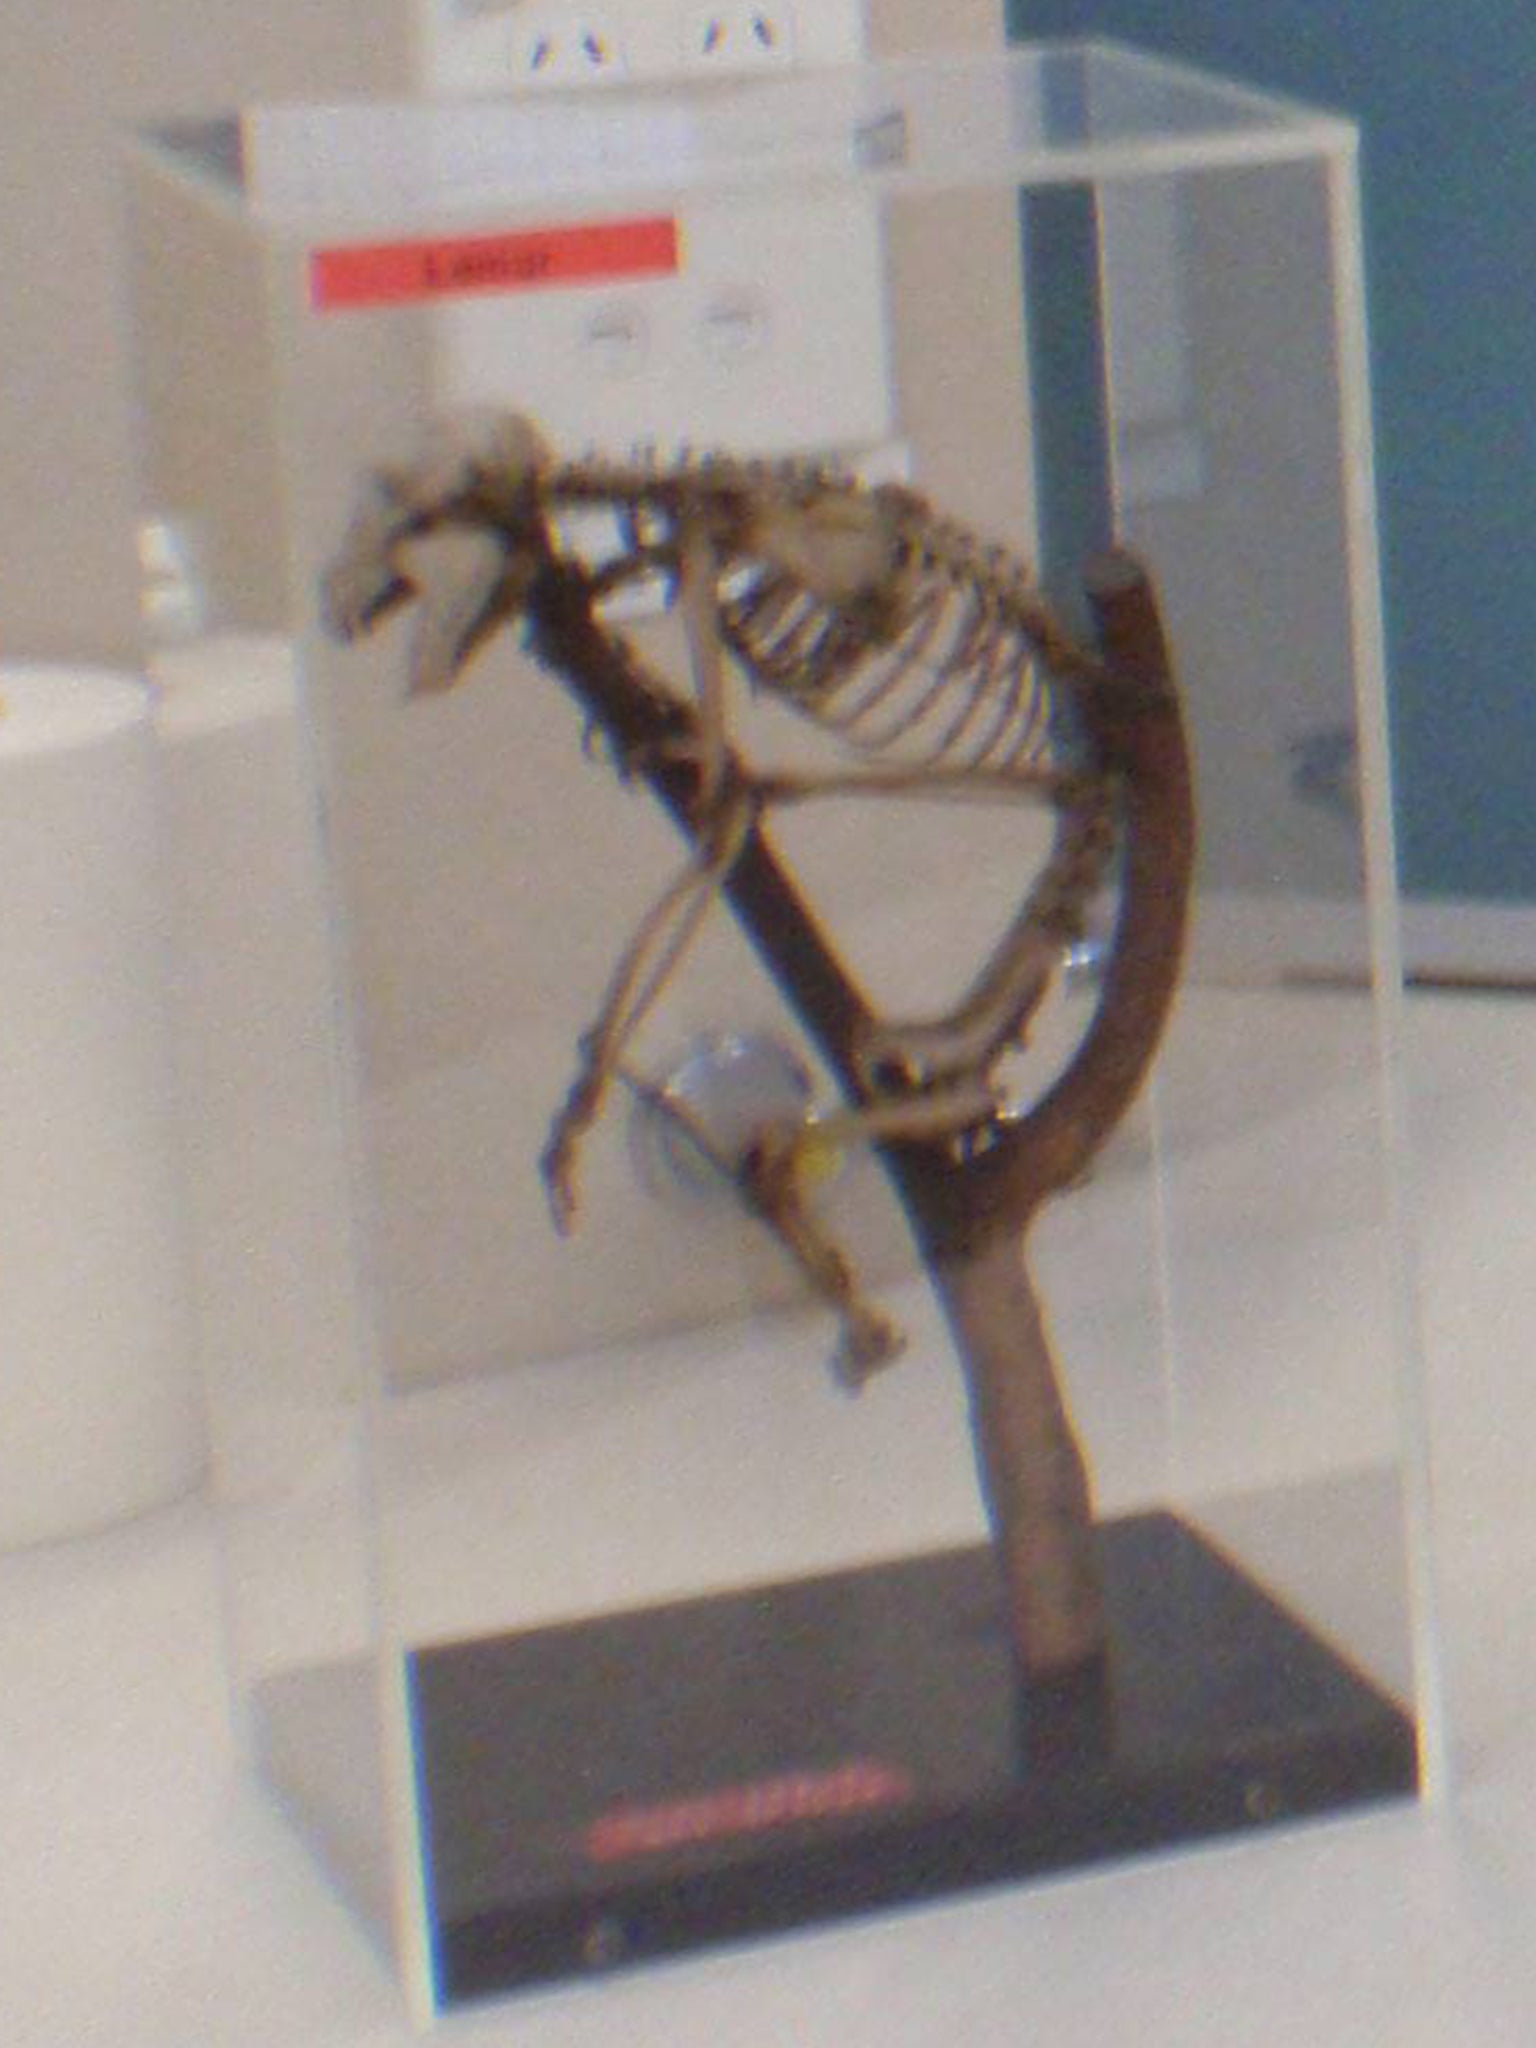 The stolen slow loris skeleton